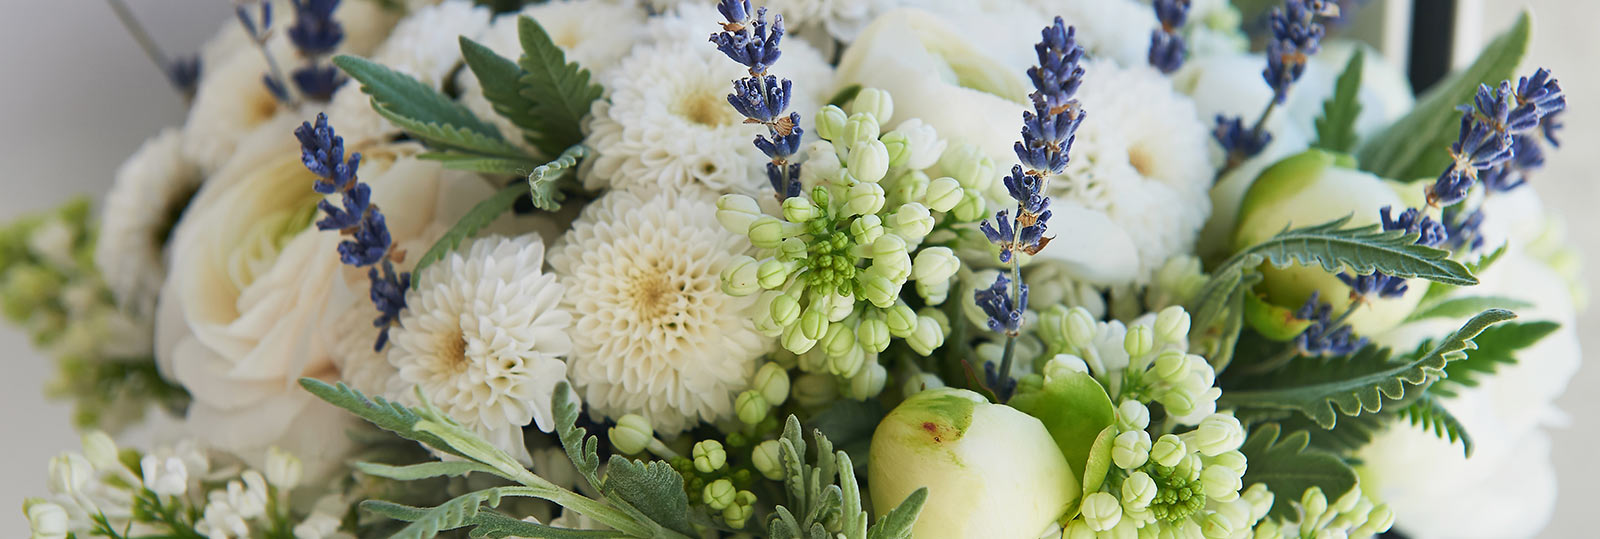 Bestseller Gift Delivery – Chicago Floral Designs 